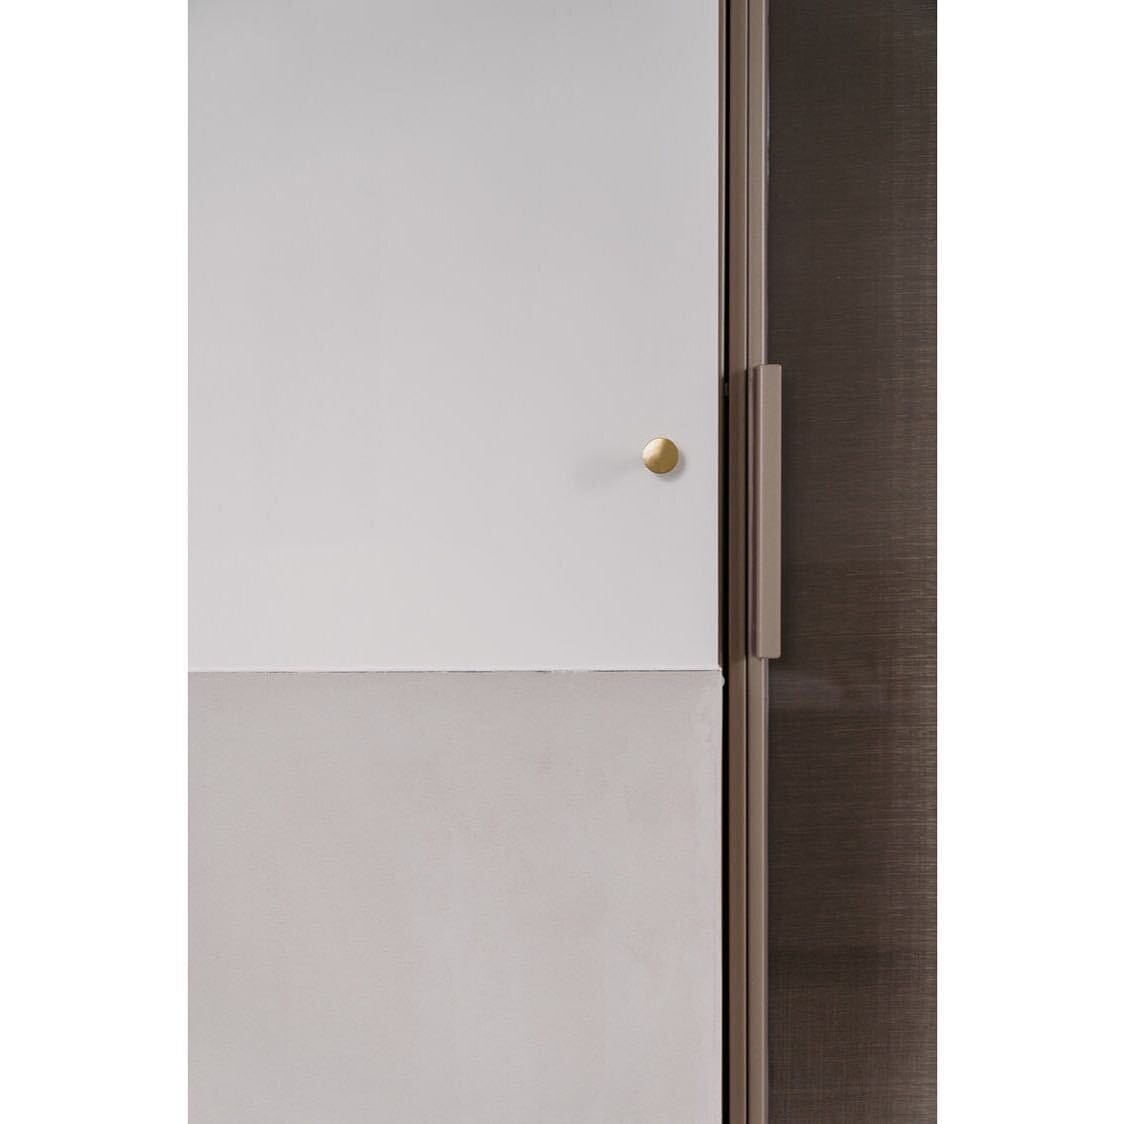 Bathroom details - Minimalistic shower door 🚿⁠⠀
⁠⠀
📸 @hanneloreveelaert 
&bull; ⁠⠀
&bull;⁠⠀
⁠⠀
#moysonderveaux #architects #bathroom #shower #gold #warm #interior #architecture #glass #steal #door #minimalistic #renovation #minimalism #glass #steel